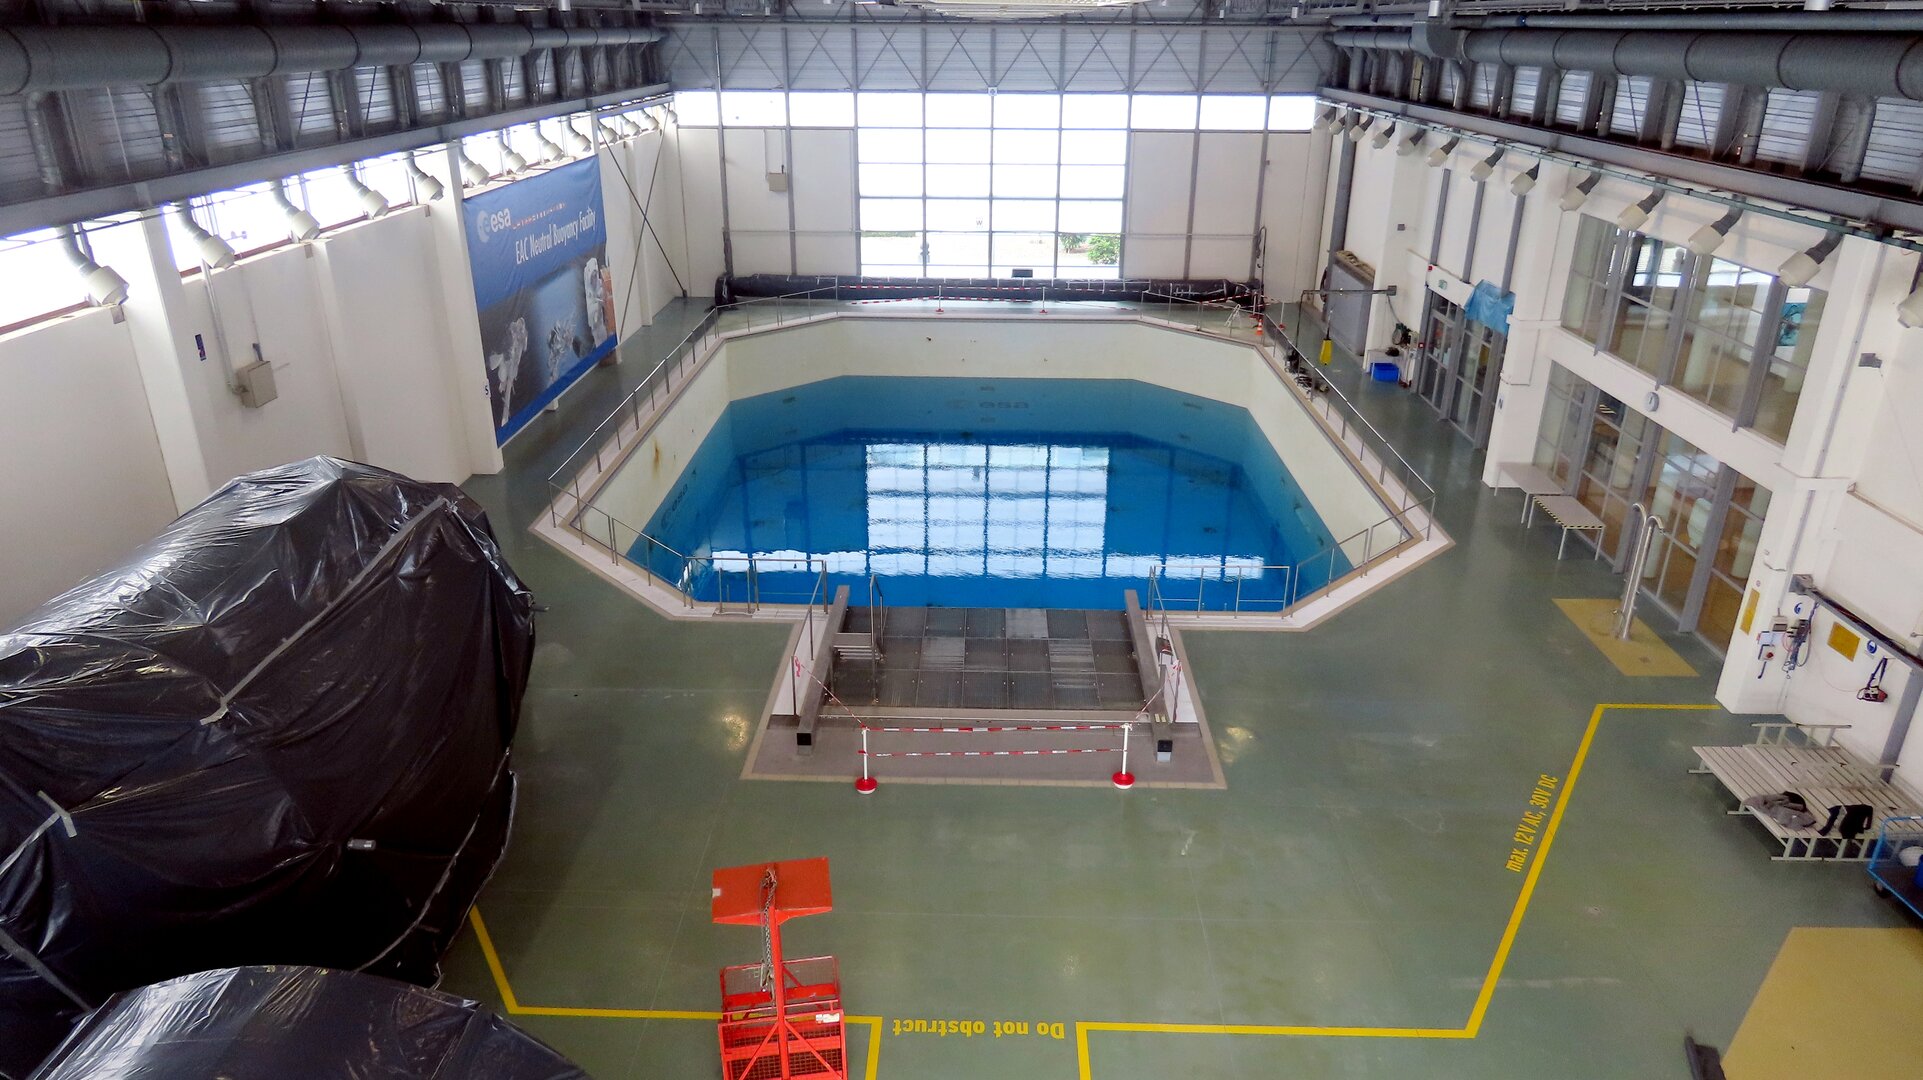 Draining the Neutral Buoyancy Facility for refurbishment